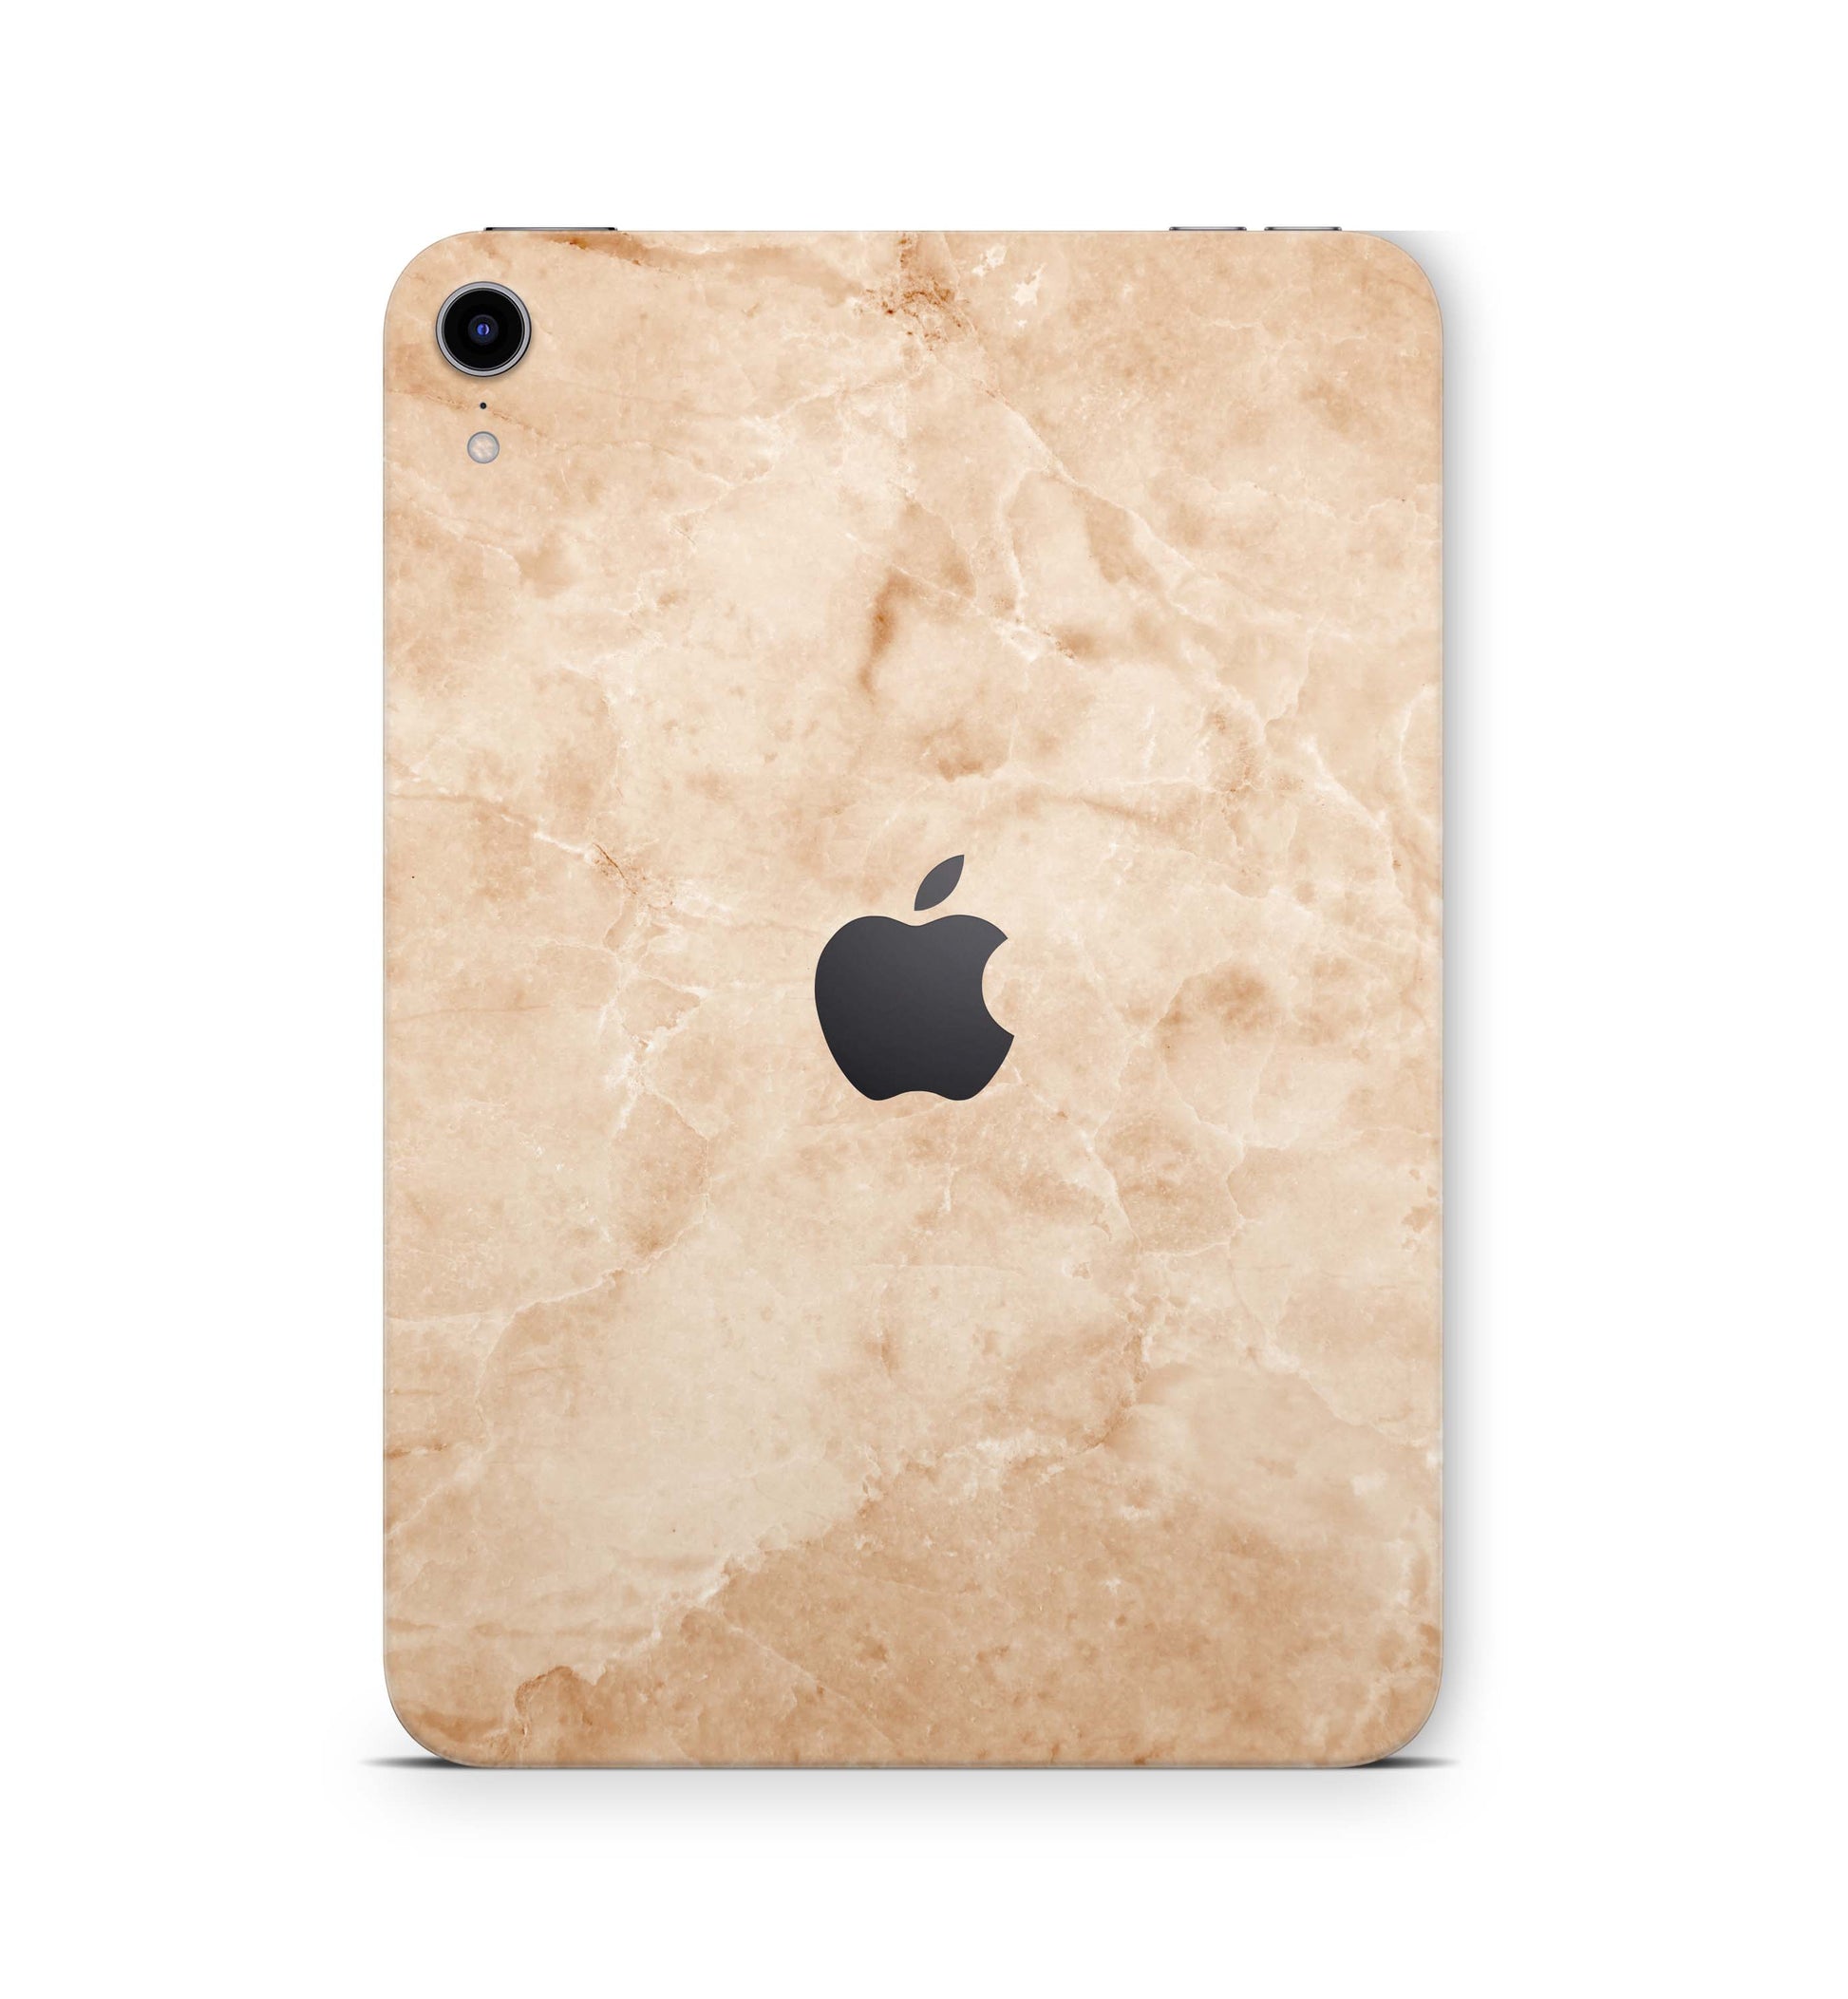 iPad Air Skin Design Cover Folie Vinyl Skins & Wraps für alle iPad Air Modelle Aufkleber Skins4u Leuchtturm  